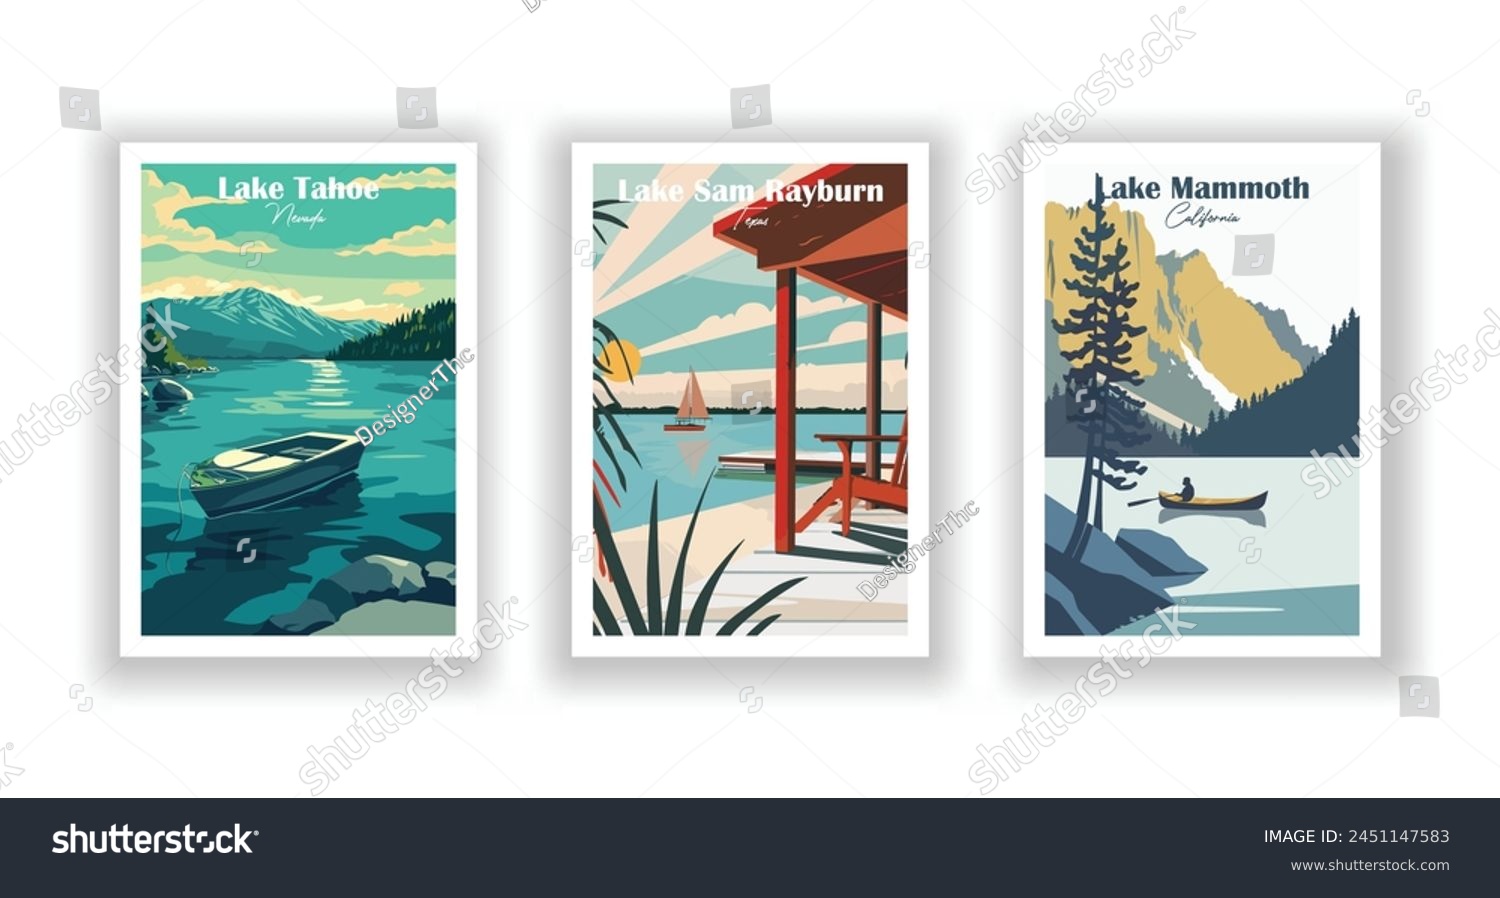 SVG of Lake Mammoth, California, Lake Sam Rayburn, Texas, Lake Tahoe, Nevada - Vintage travel poster. Vector illustration. High quality prints svg